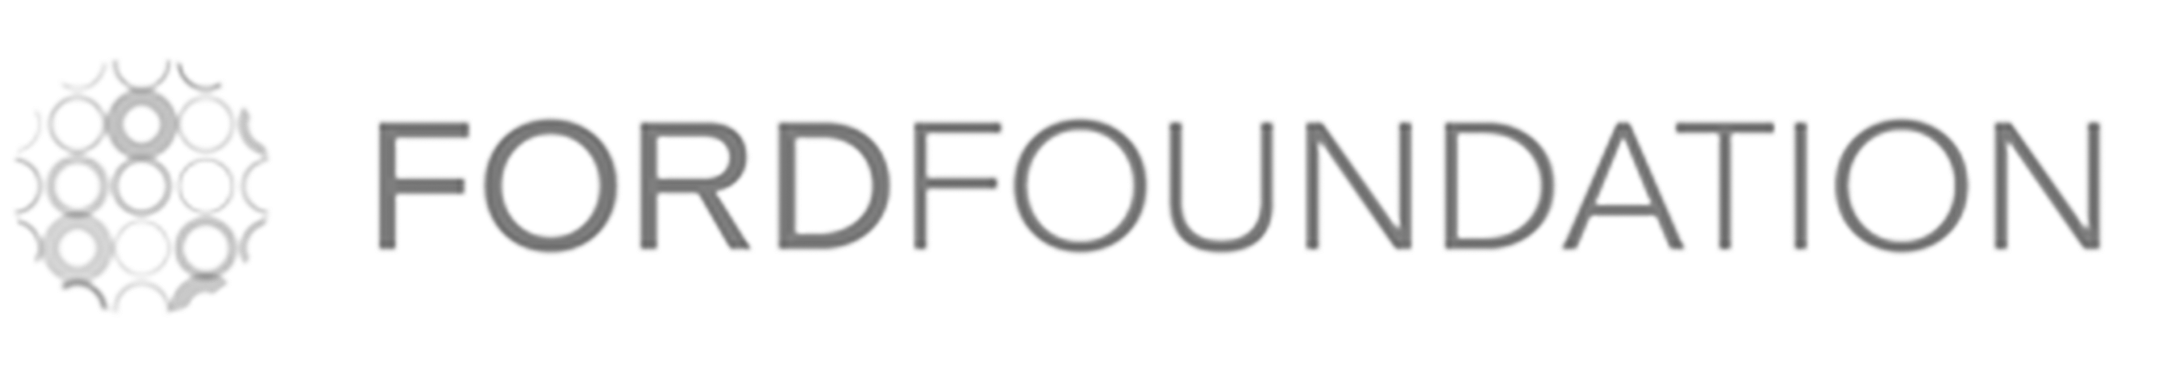 Ford Foundation-bw